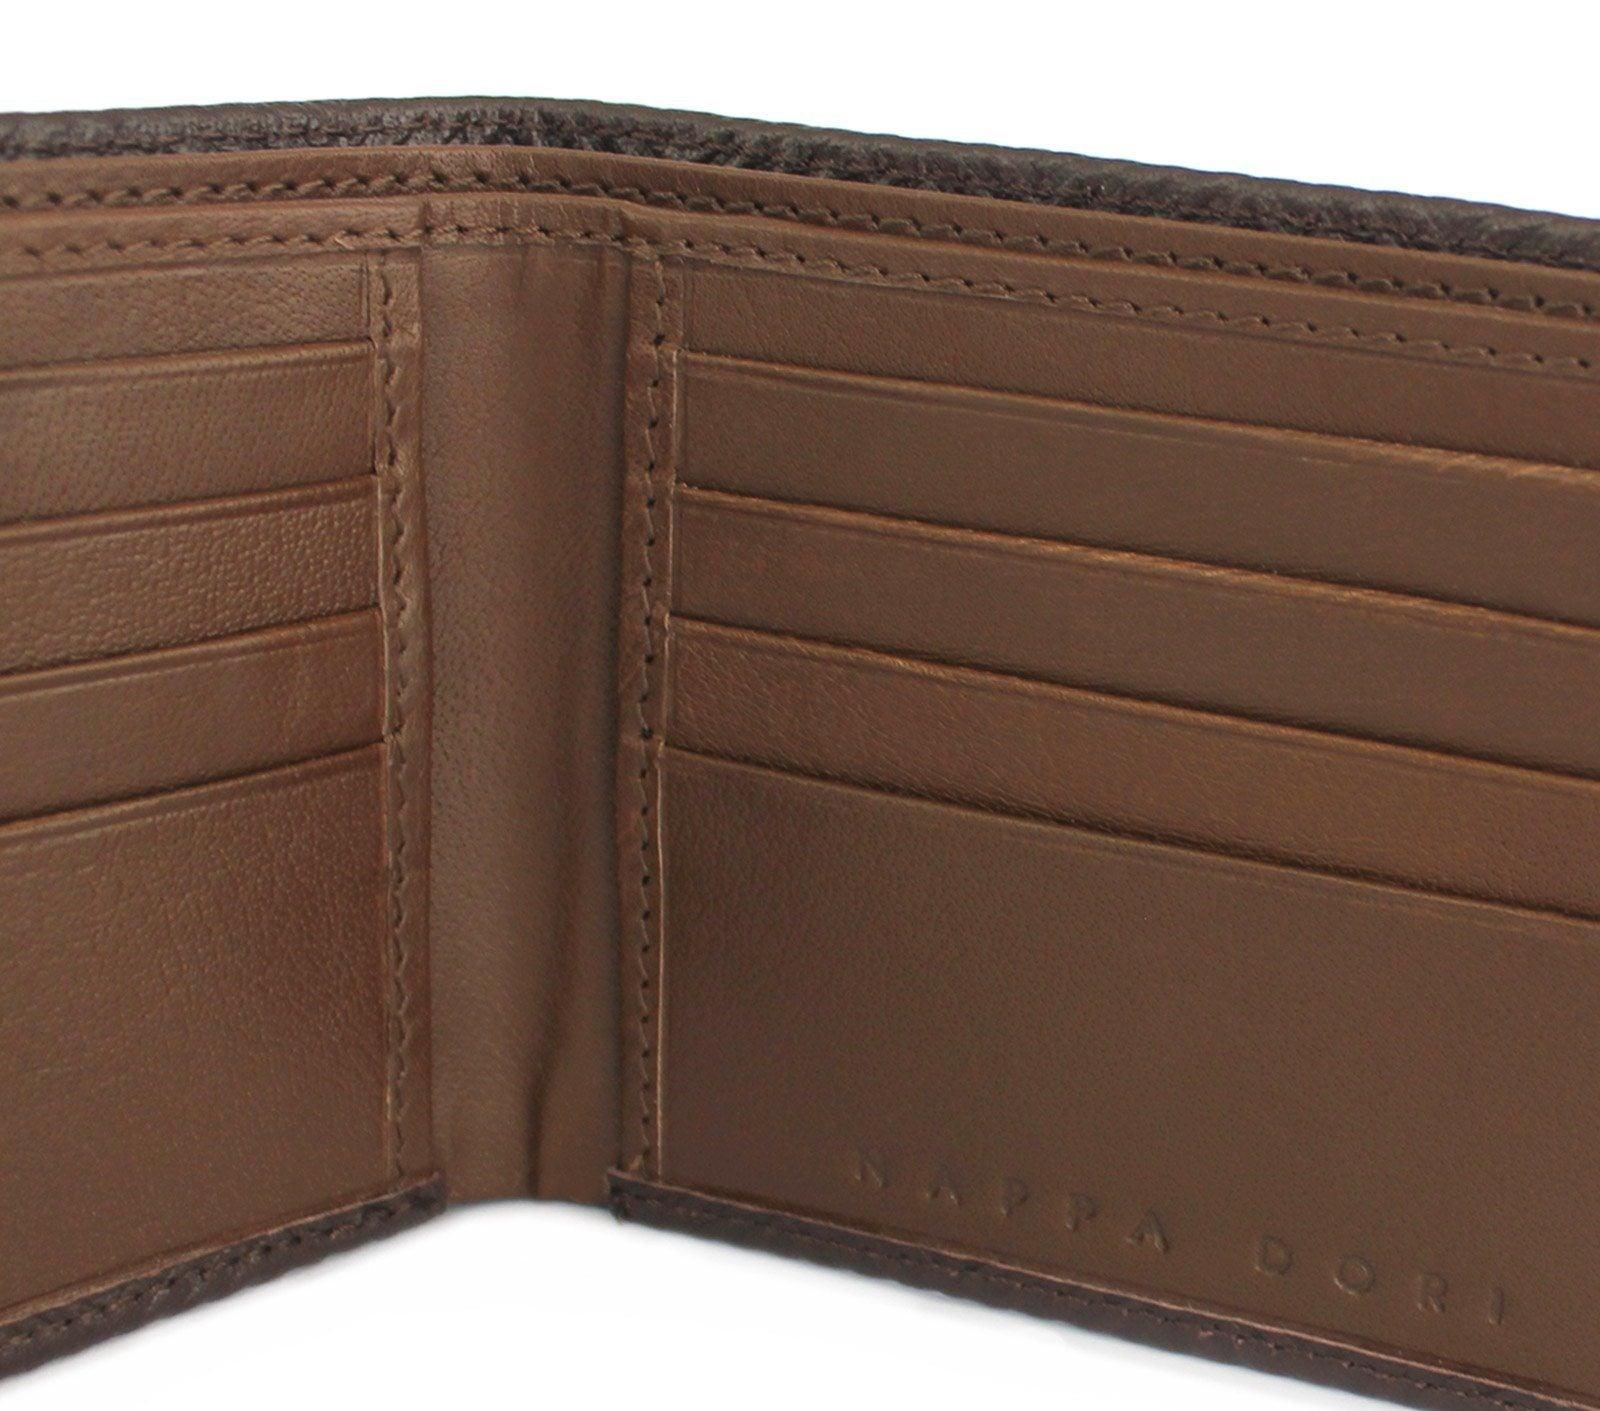 Buy Chevron Wallet Online  Leather Wallet India – Nappa Dori